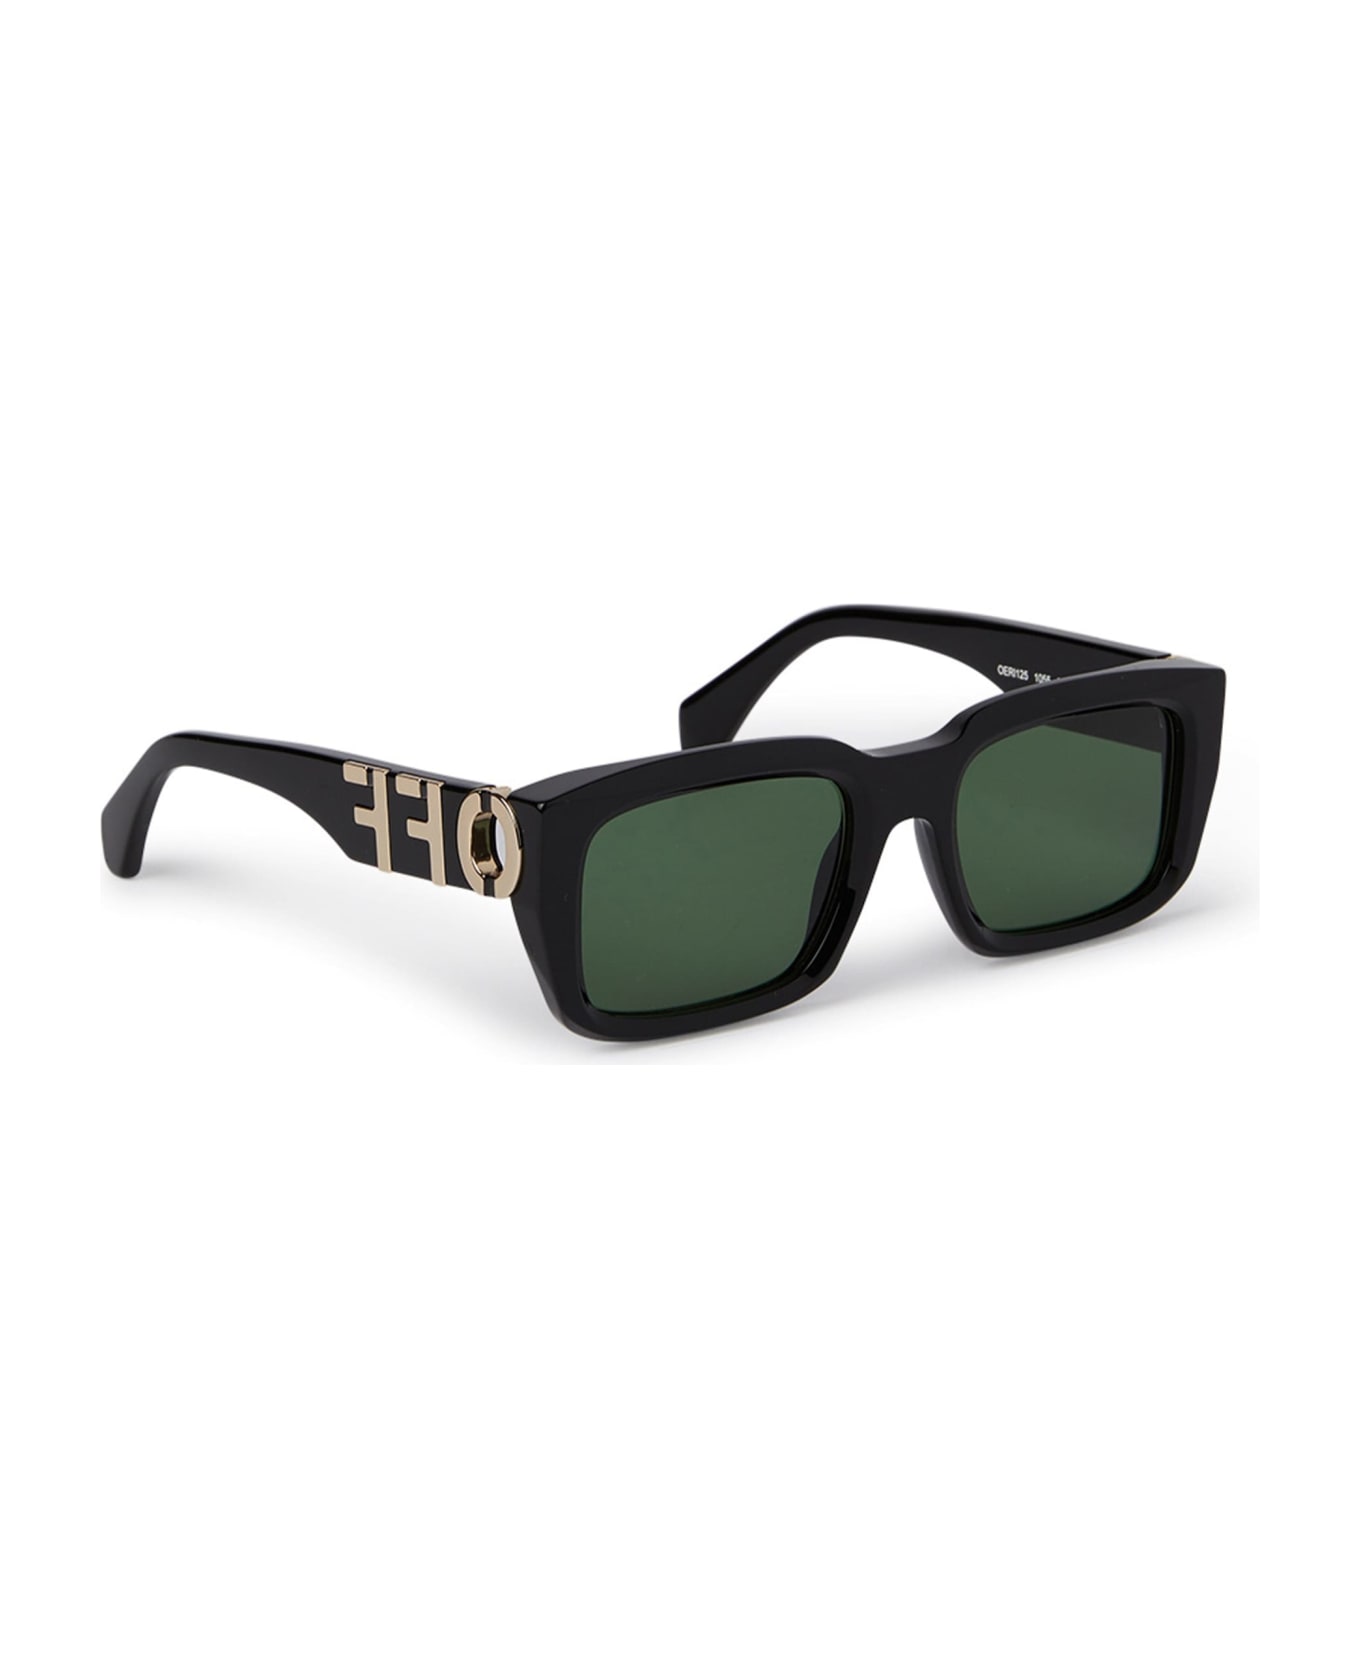 Off-White Hays - Black / Green Sunglasses - Black